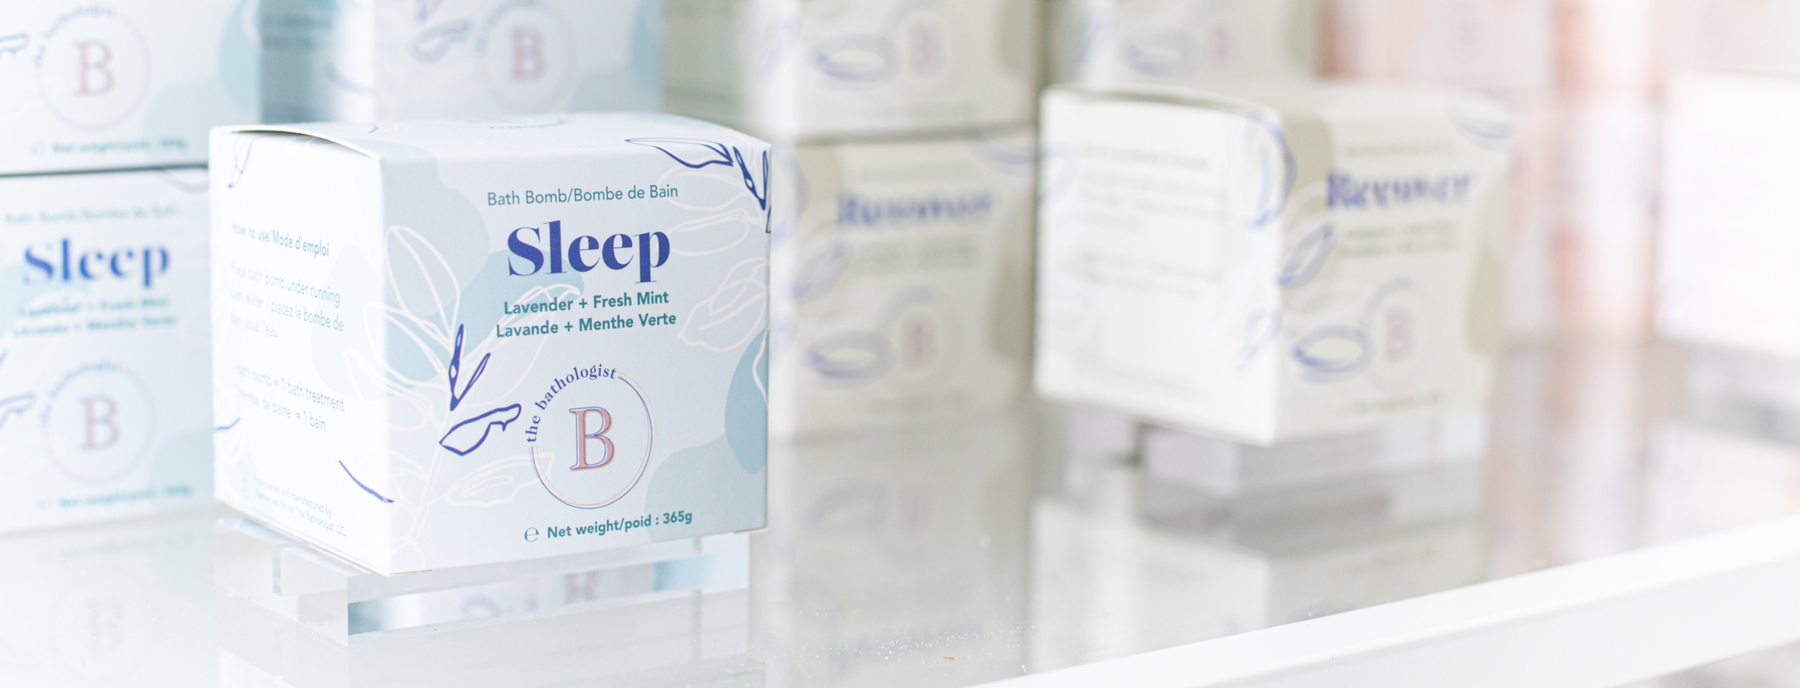 Sleep + Recover Bath Bombs on Shelf